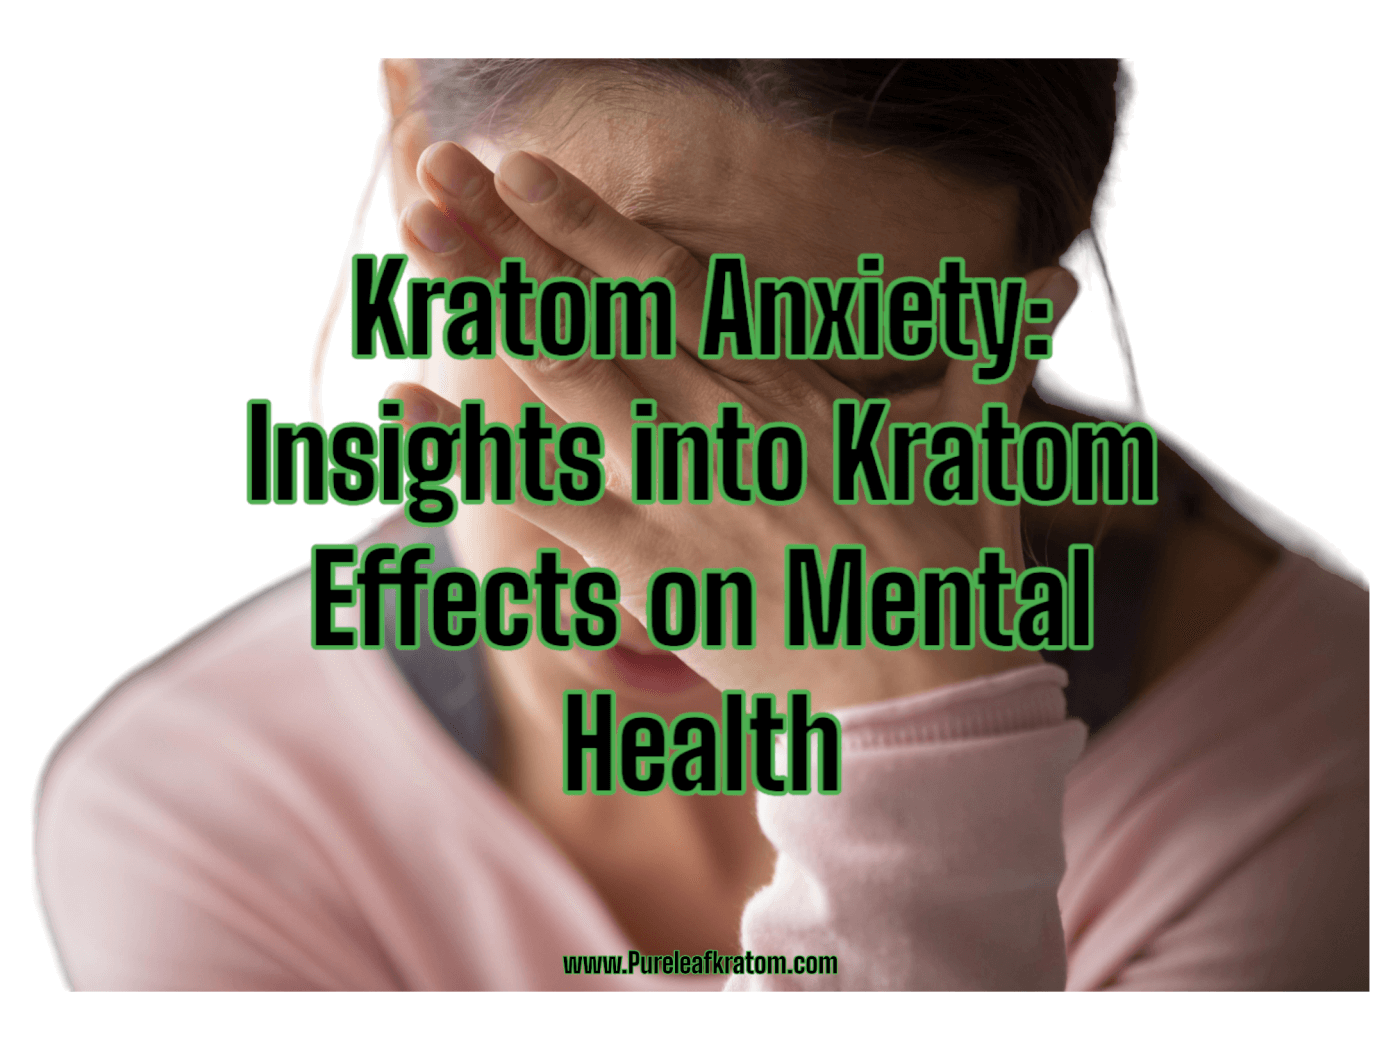 Kratom Anxiety: Insights into Kratom Effects on Mental Health